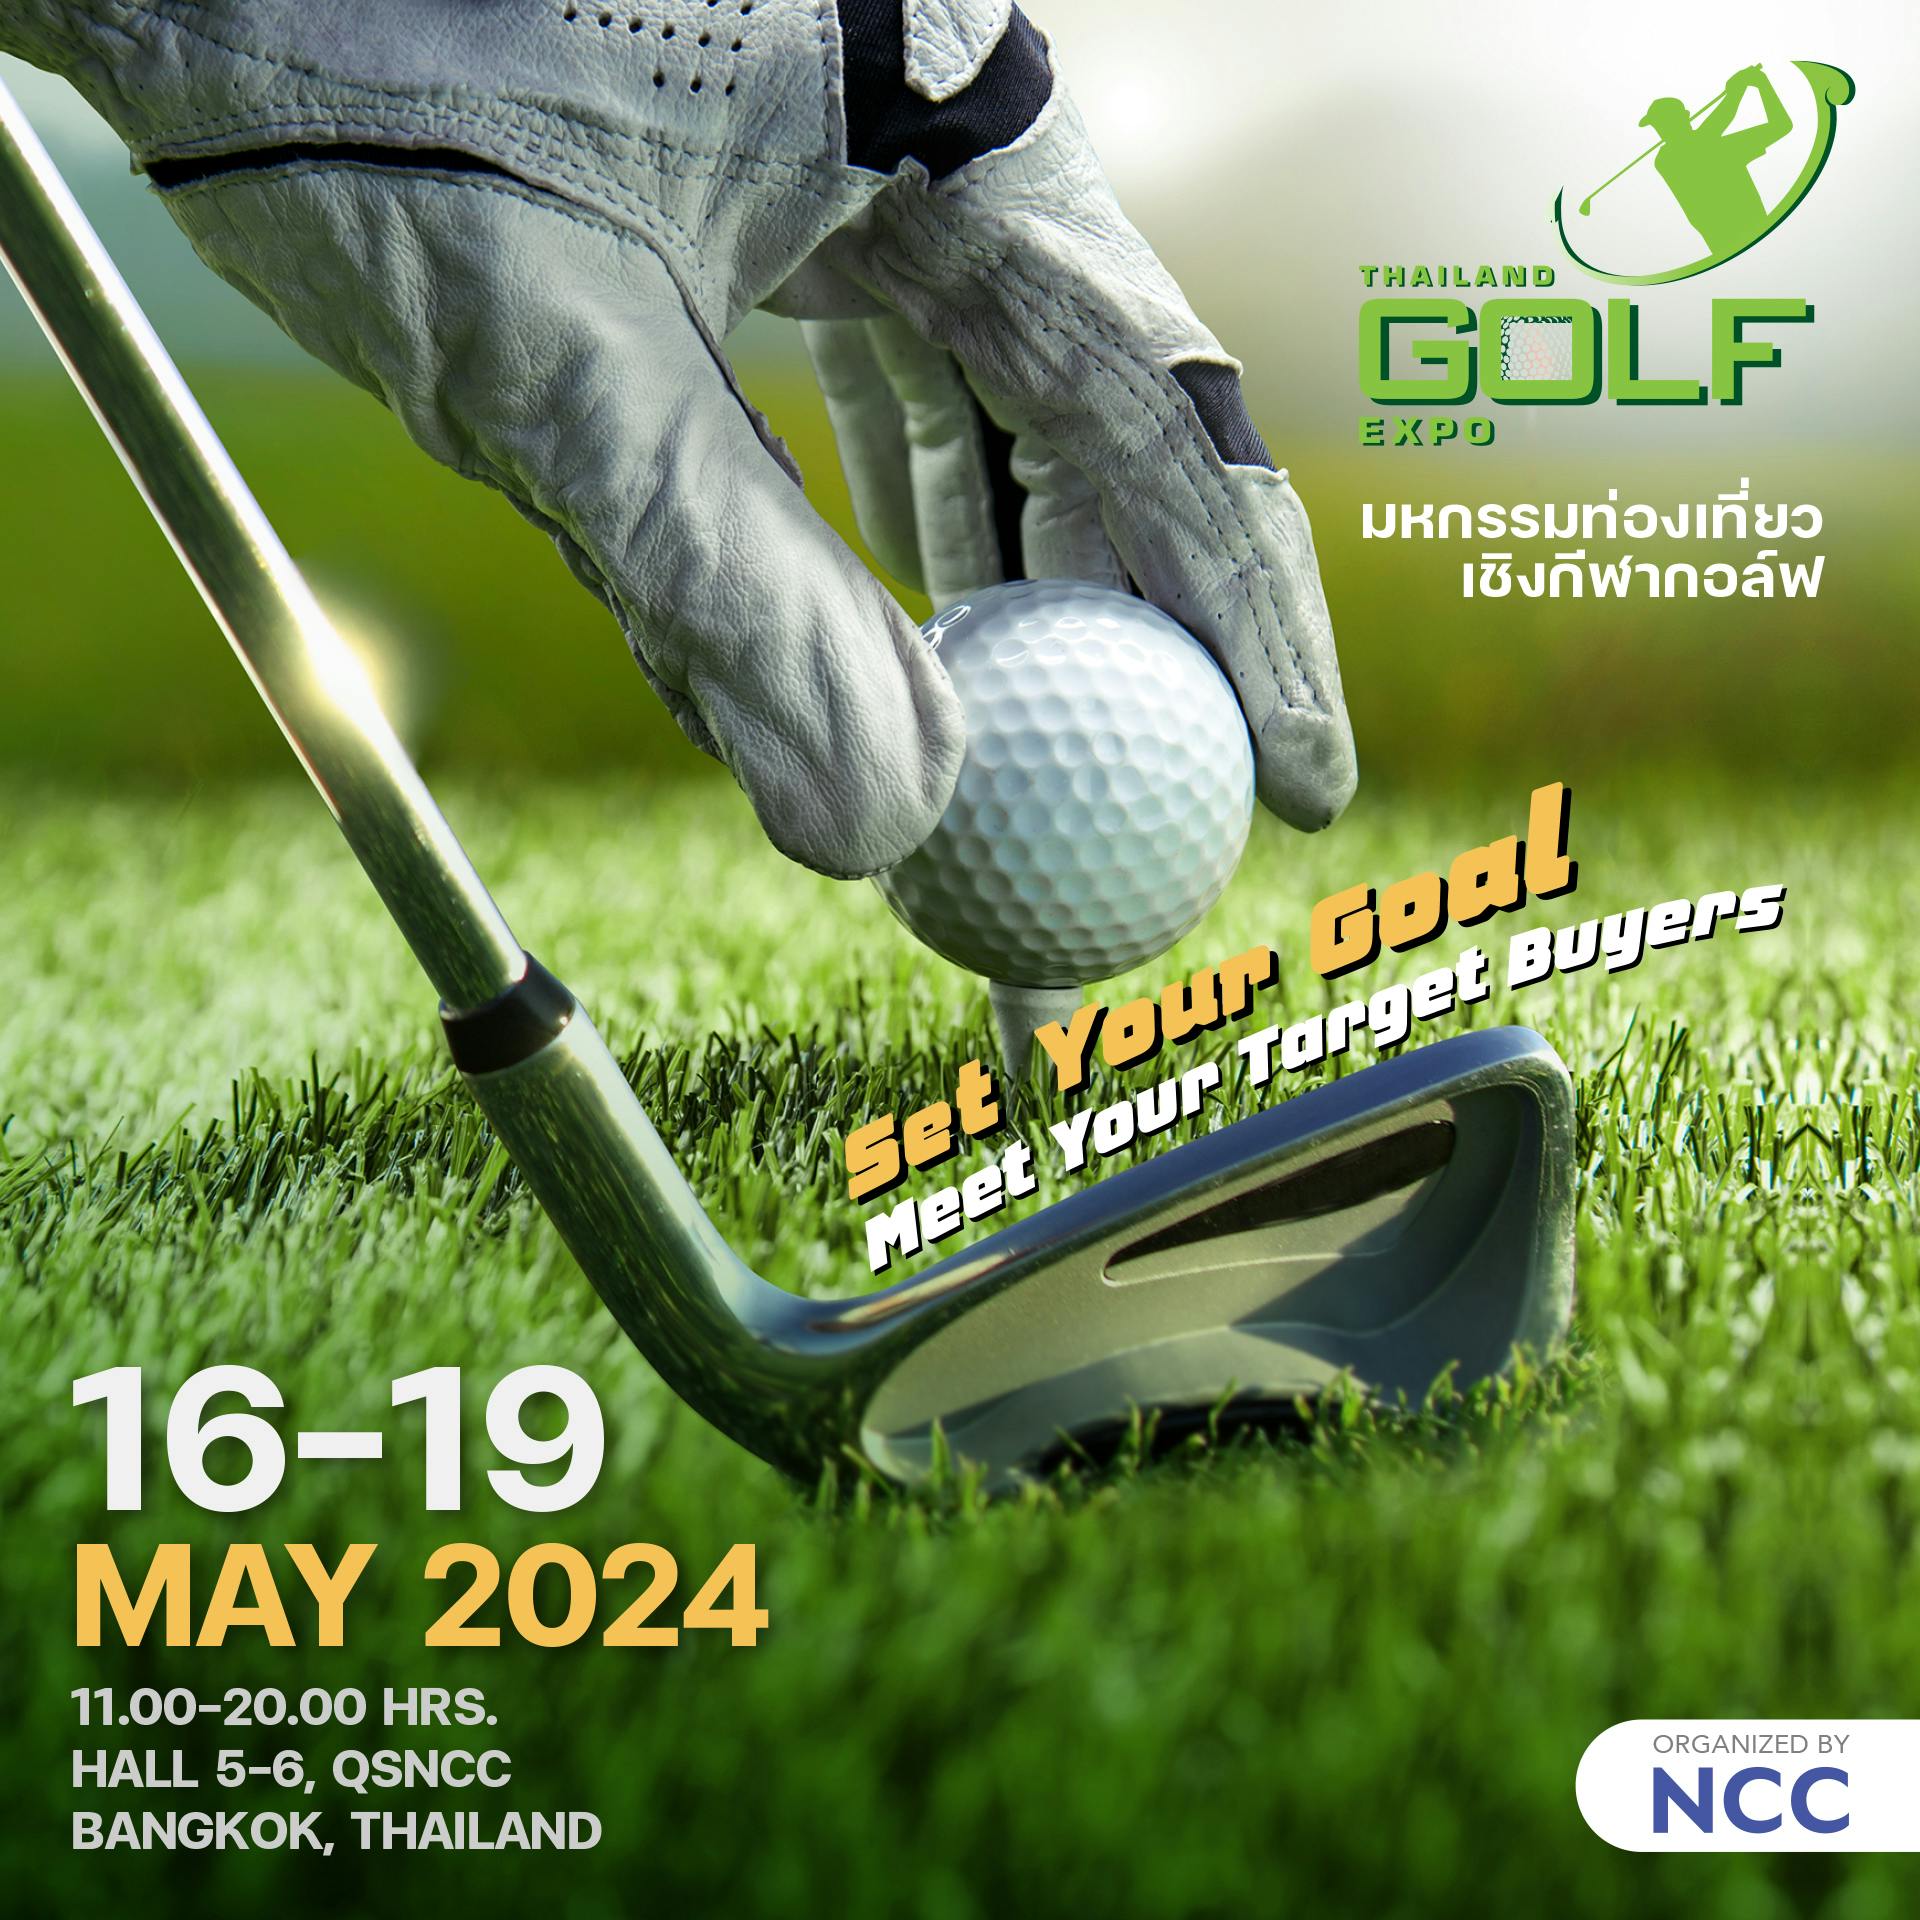 Thailand Golf Expo 2024